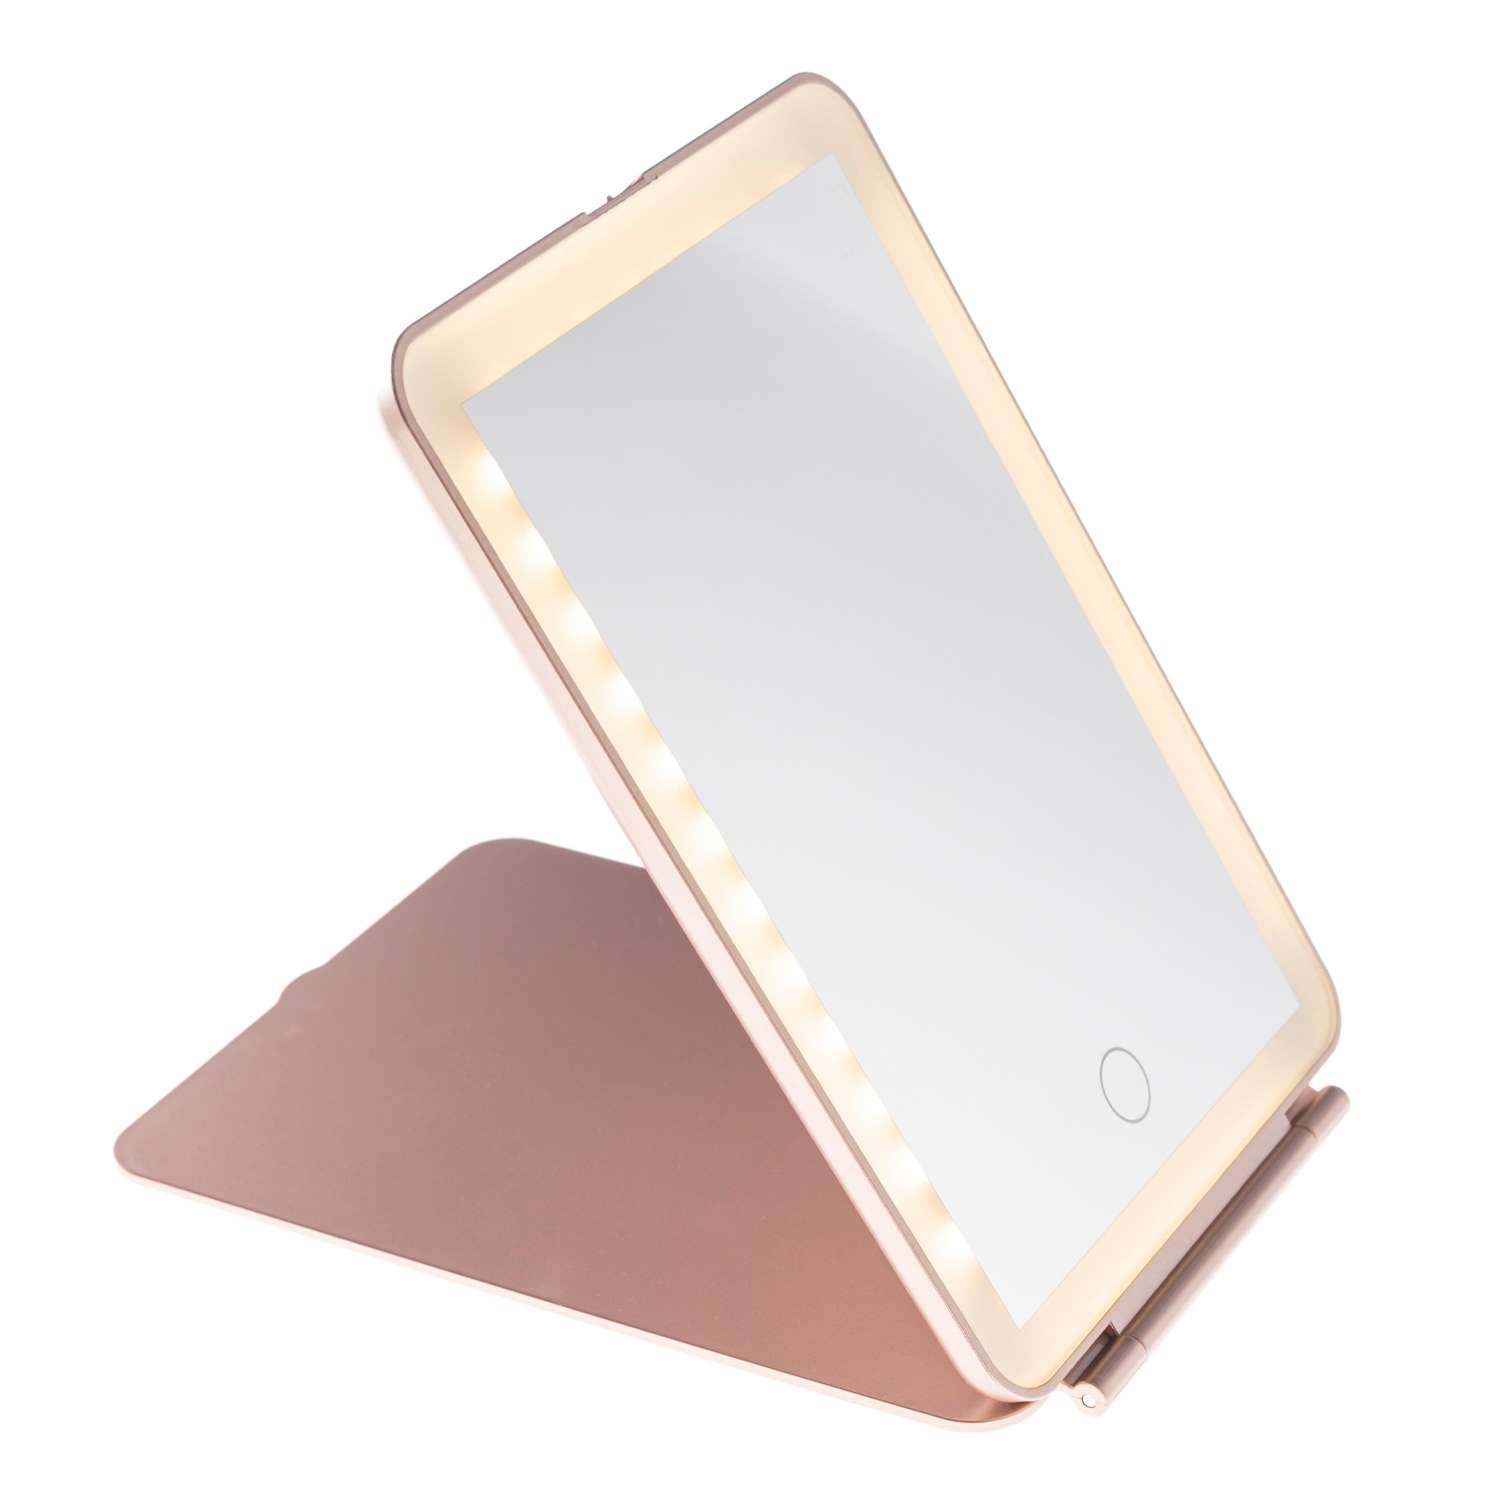 Зеркало косметическое CleverCare в форме планшета с LED подсветкой монохром цвет белый - фото 3